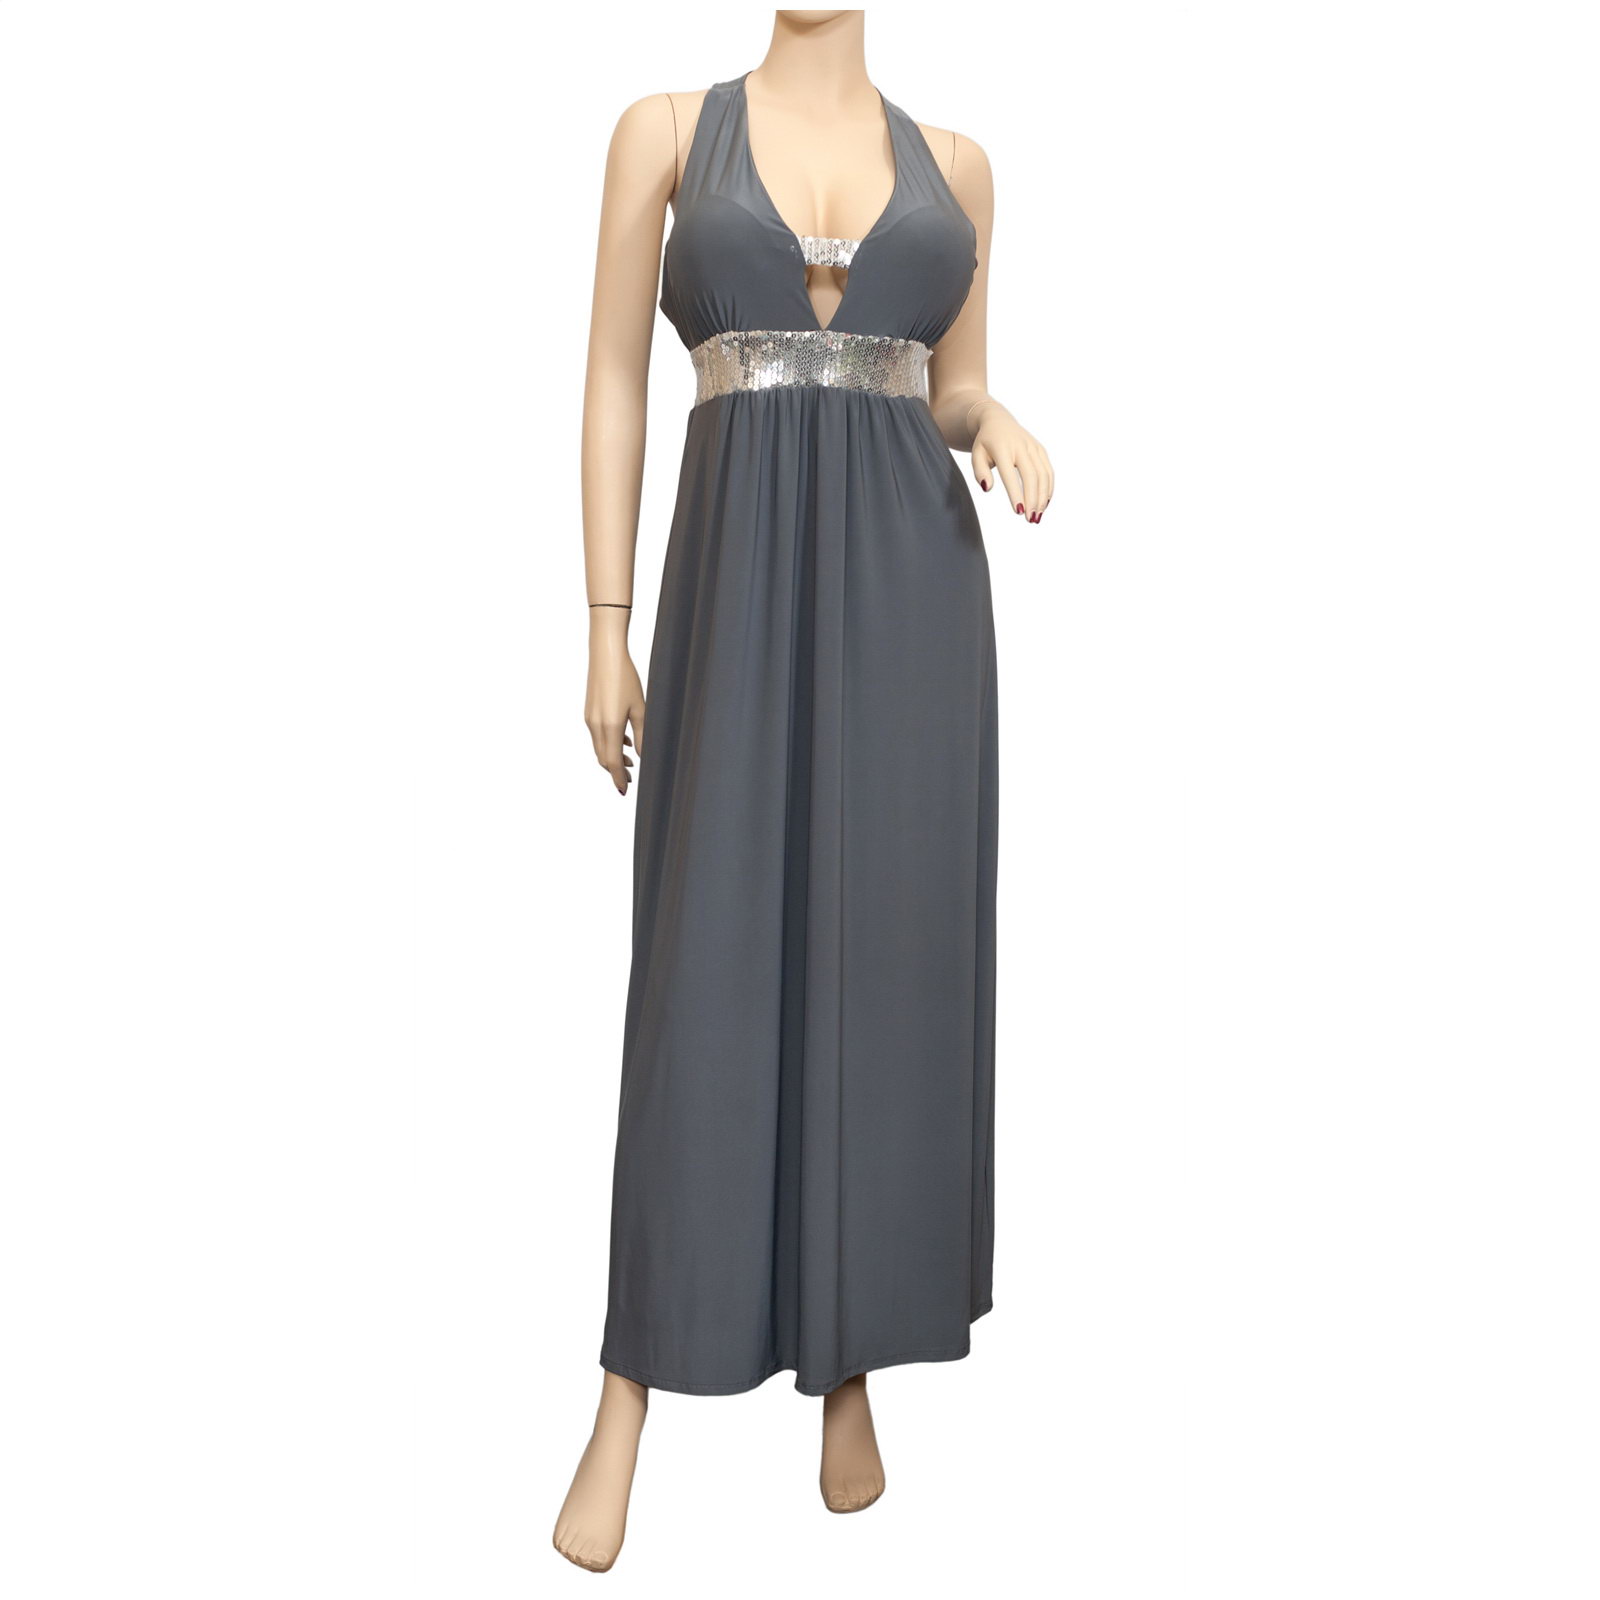 Plus Size Low Cut V-Neck Empire Waist Maxi Dress Gray | eVogues Apparel